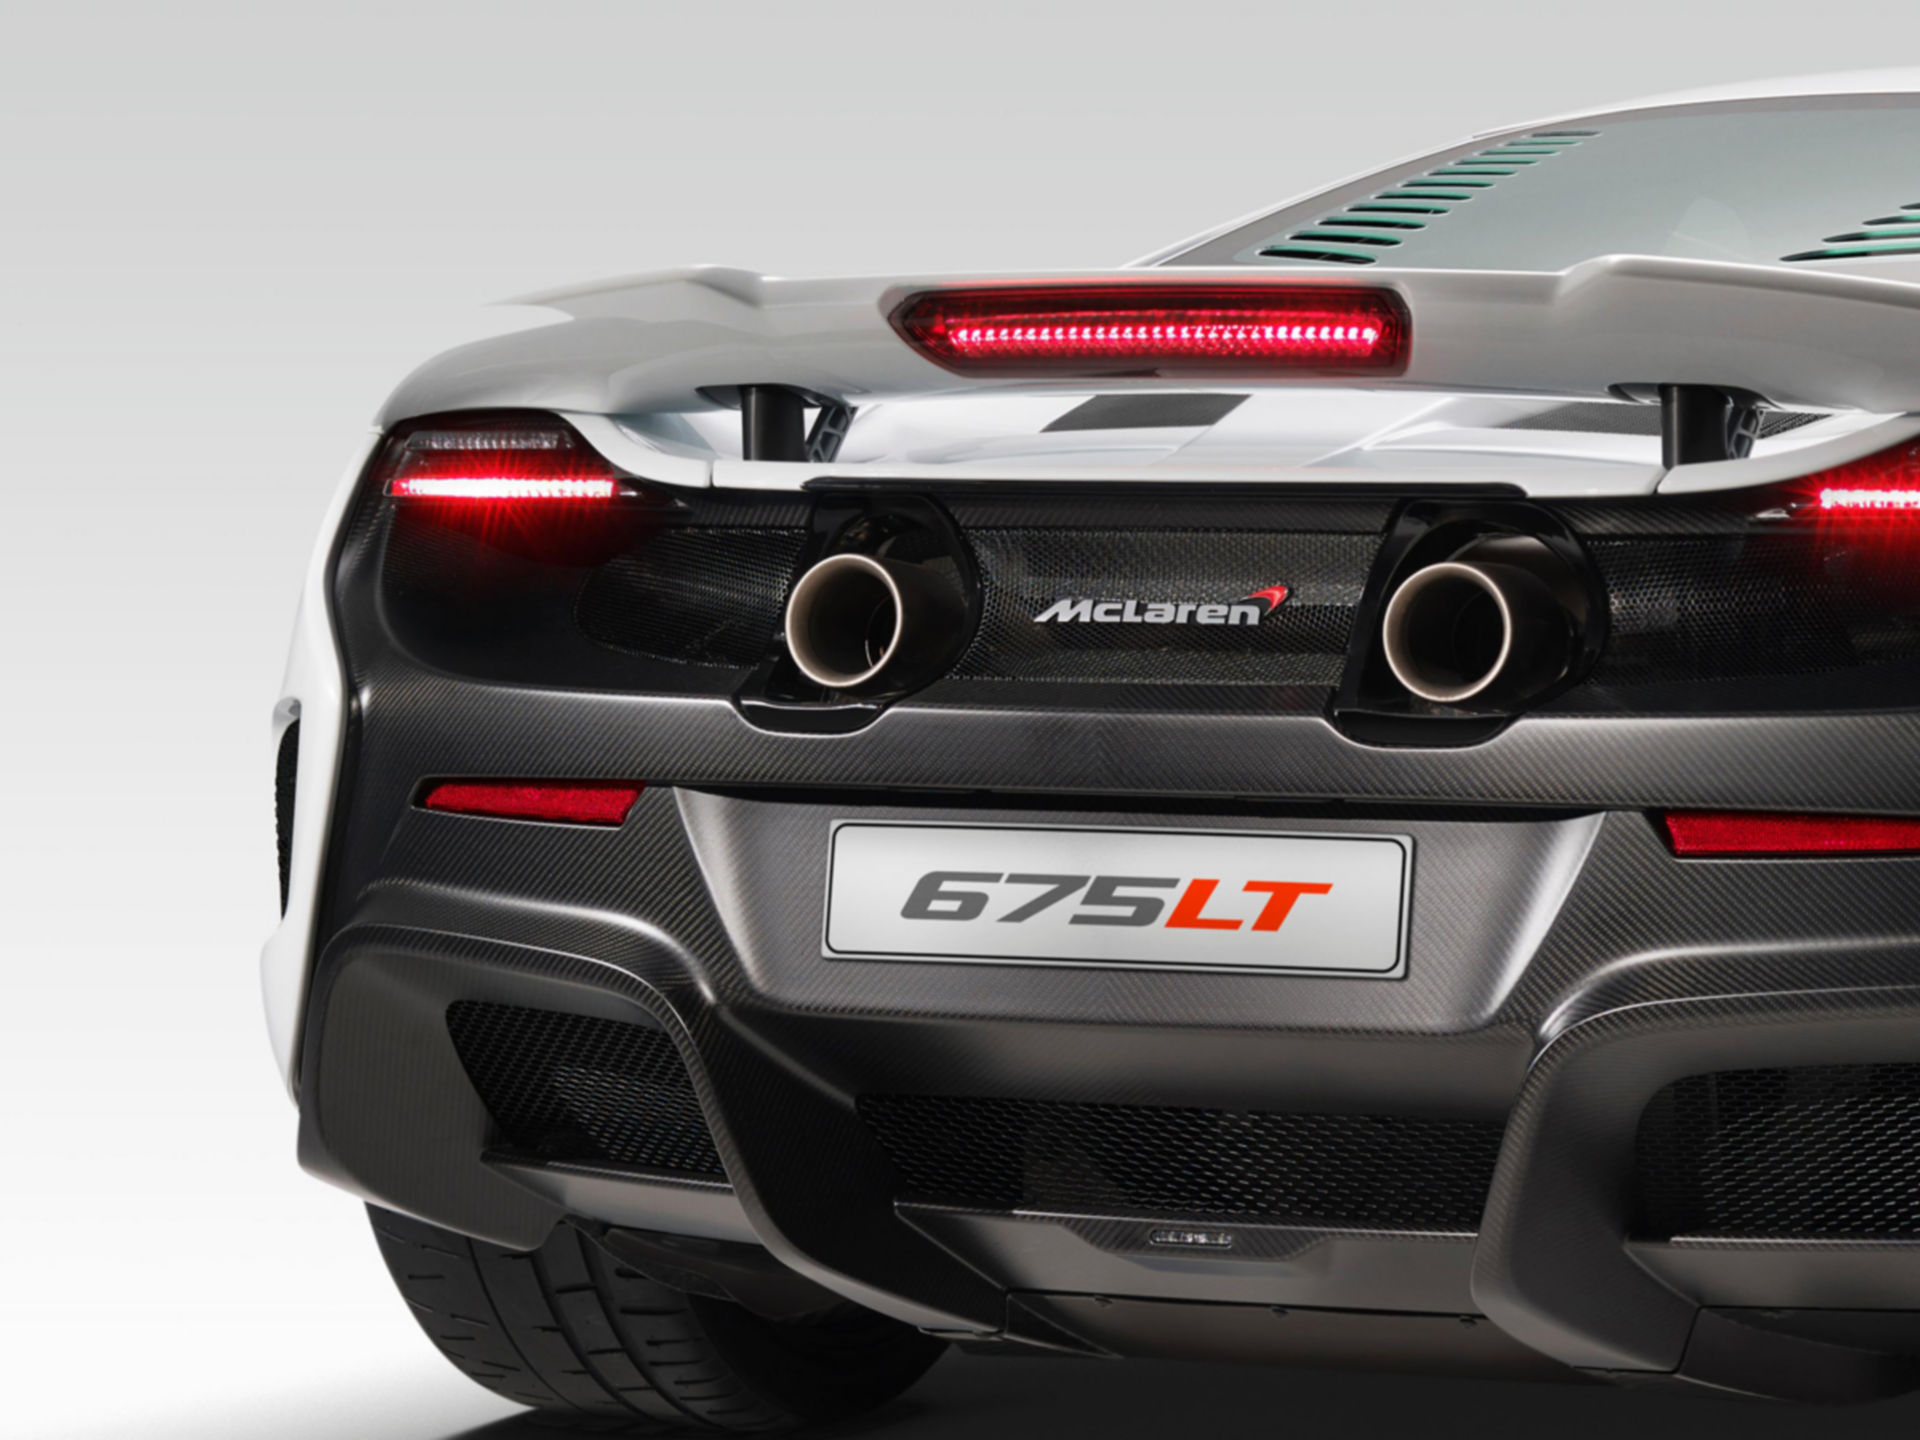 | Automotive Performance US 675LT McLaren | - McLaren